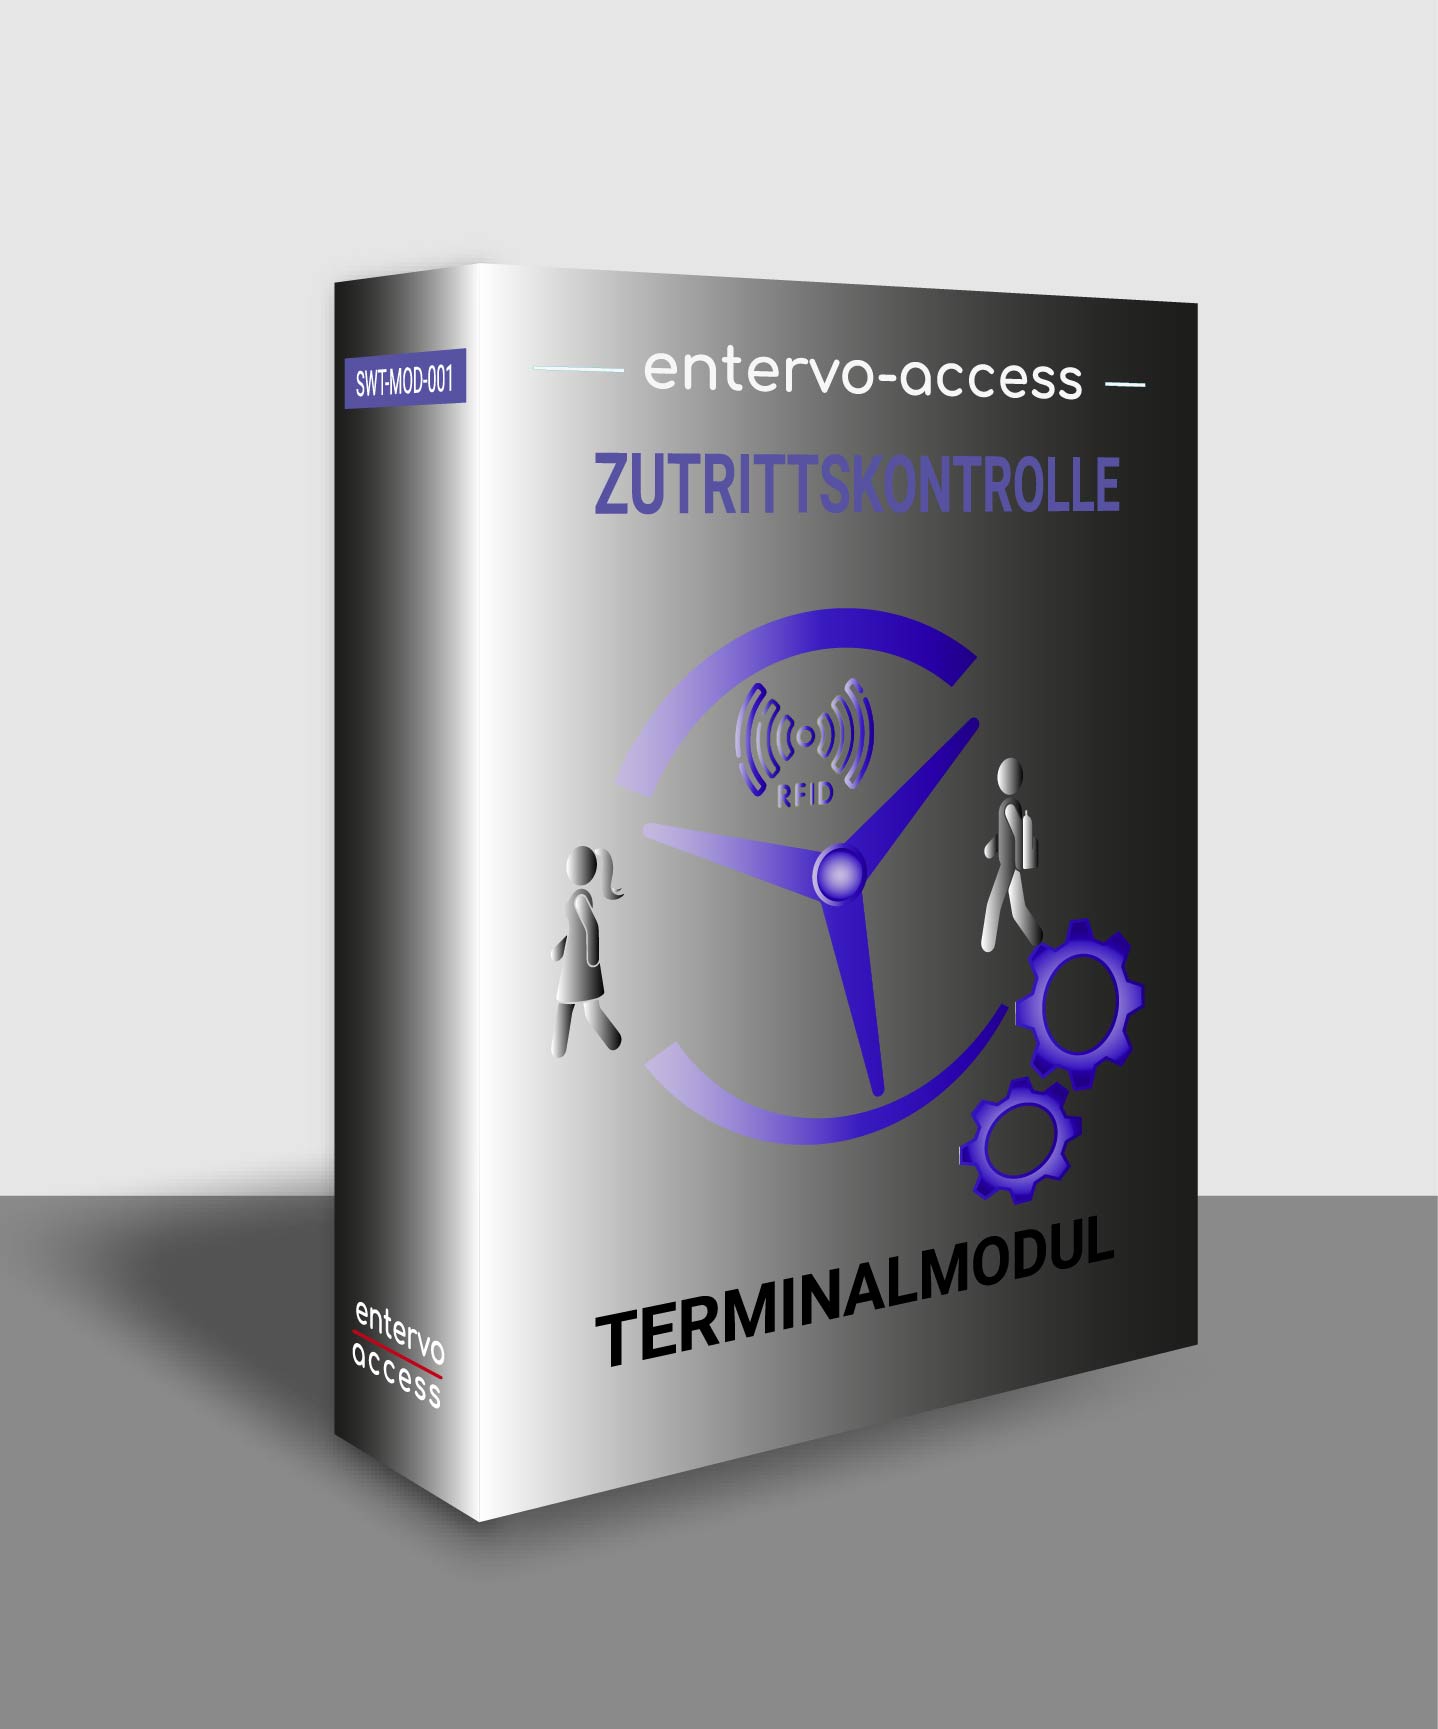 entervo-access Softwaremodul Zutrittskontrolle Terminalmodul